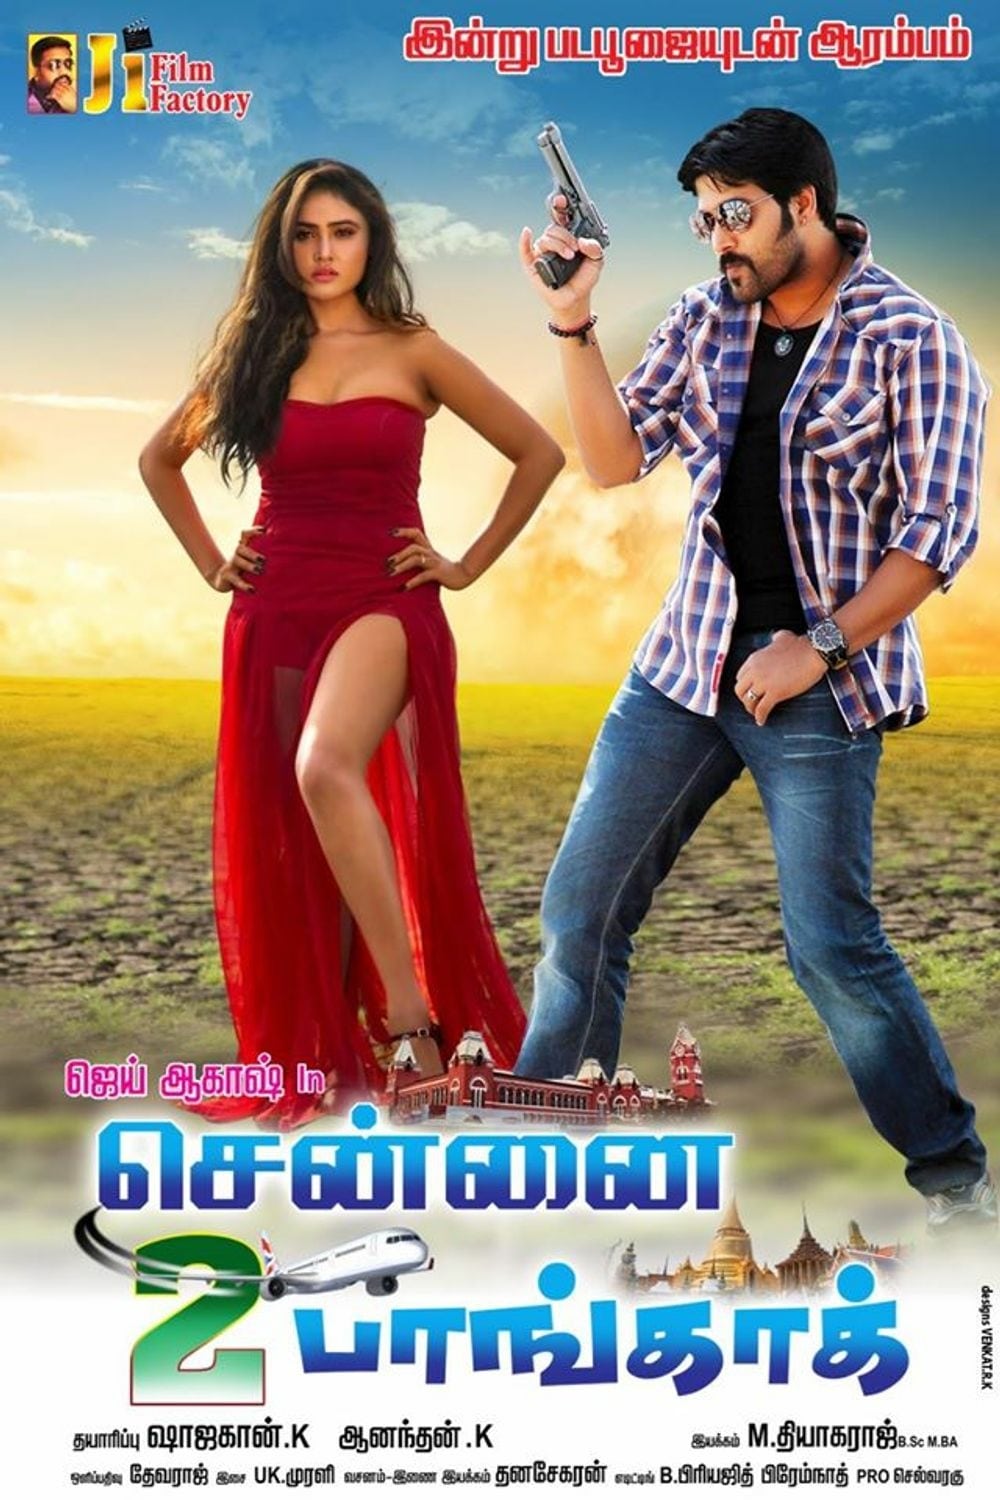 Poster for the movie "Chennai 2 Bangkok"